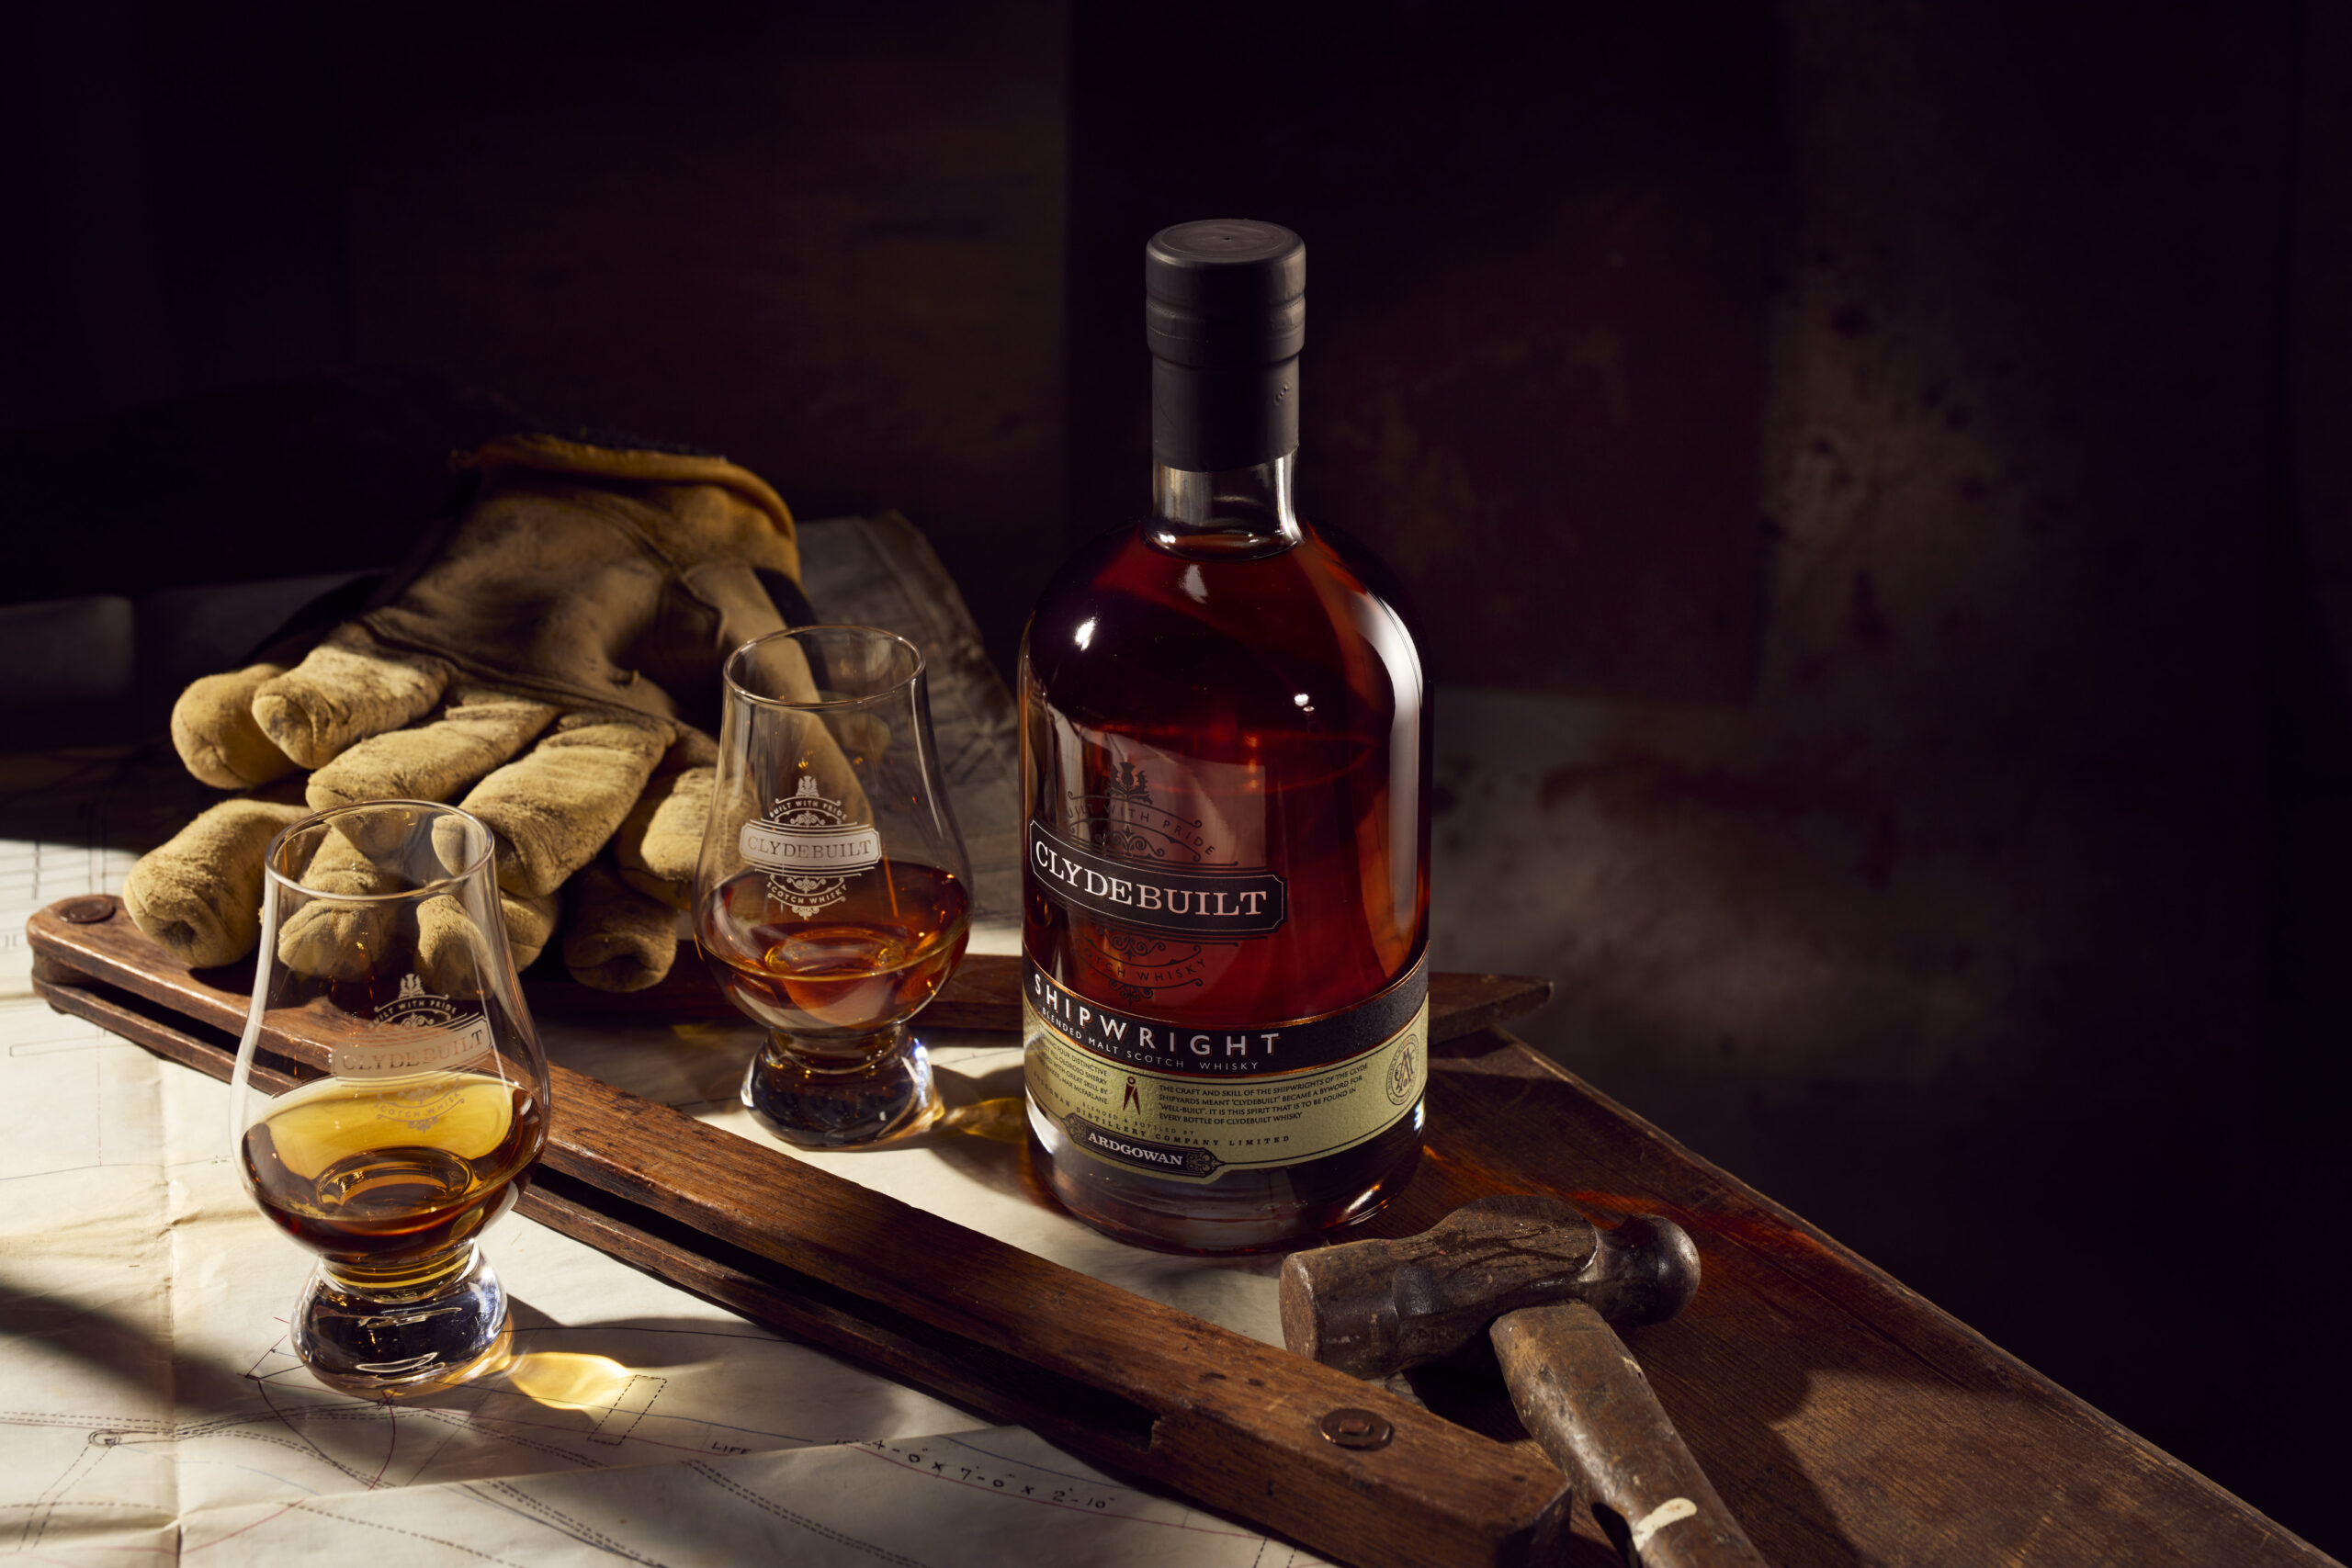 Ardgowan debuts Shipwright whisky - The Spirits Business